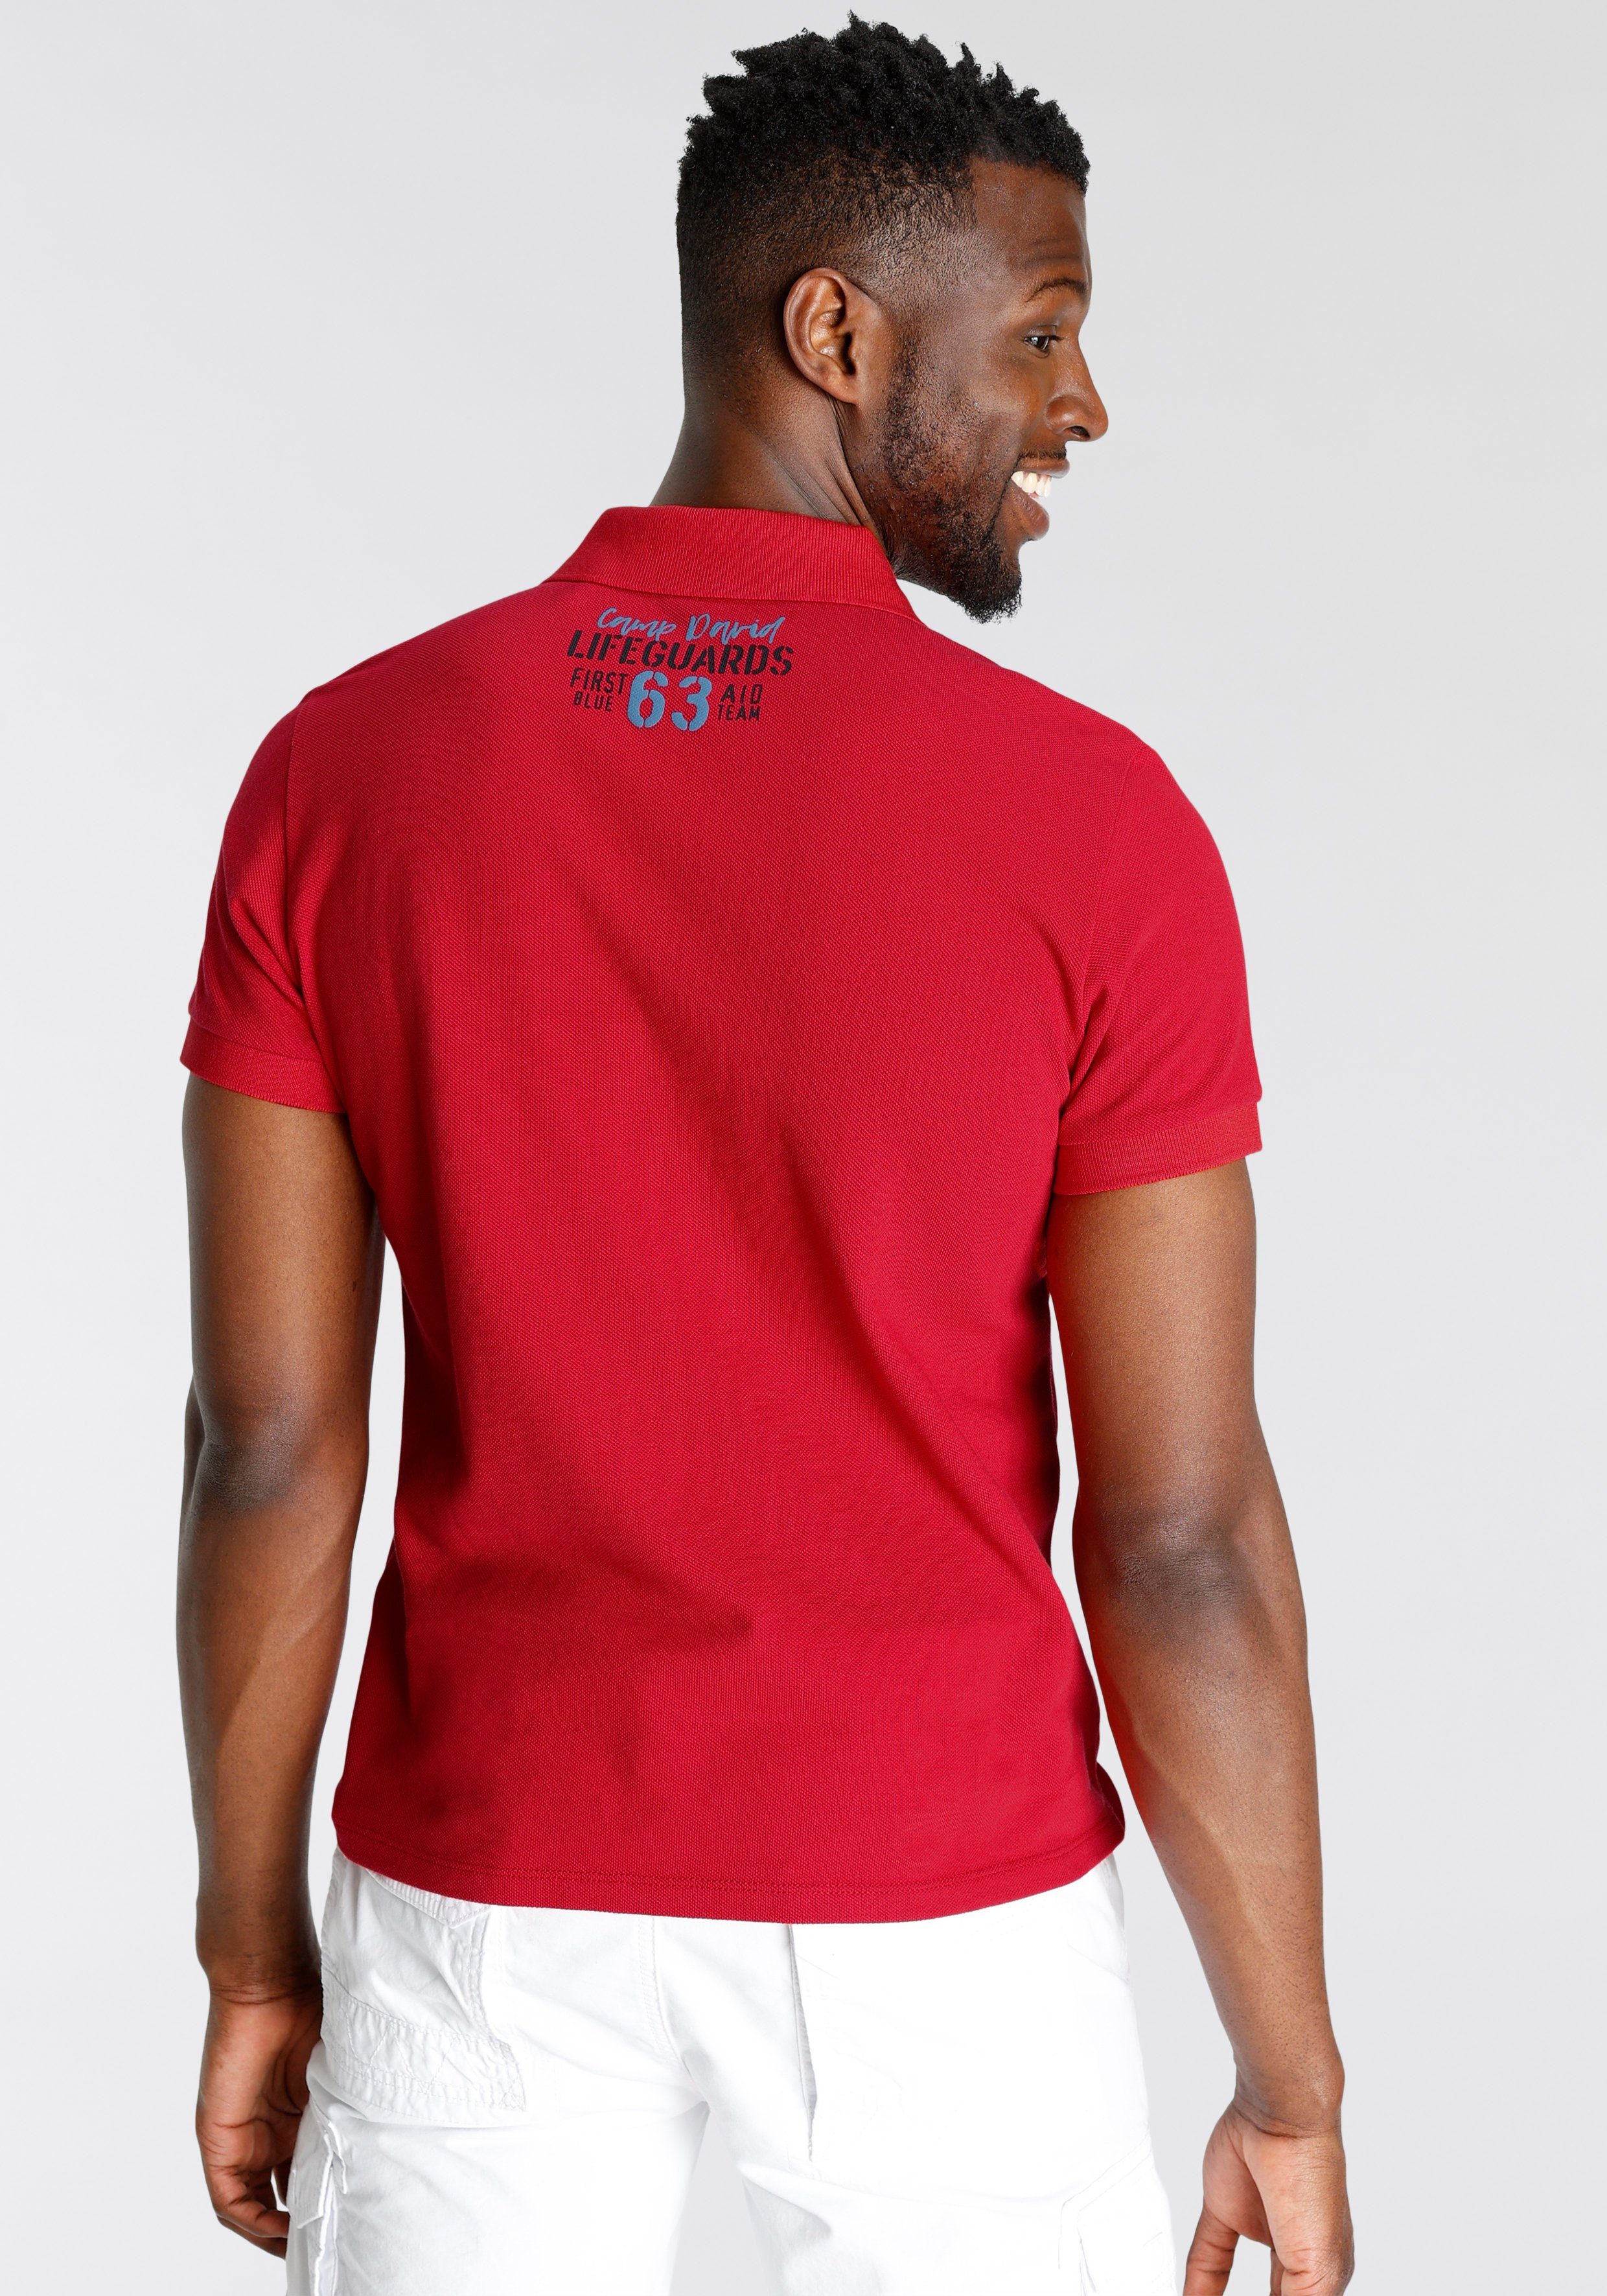 in DAVID red hochwertiger Piqué-Qualität Poloshirt sun CAMP